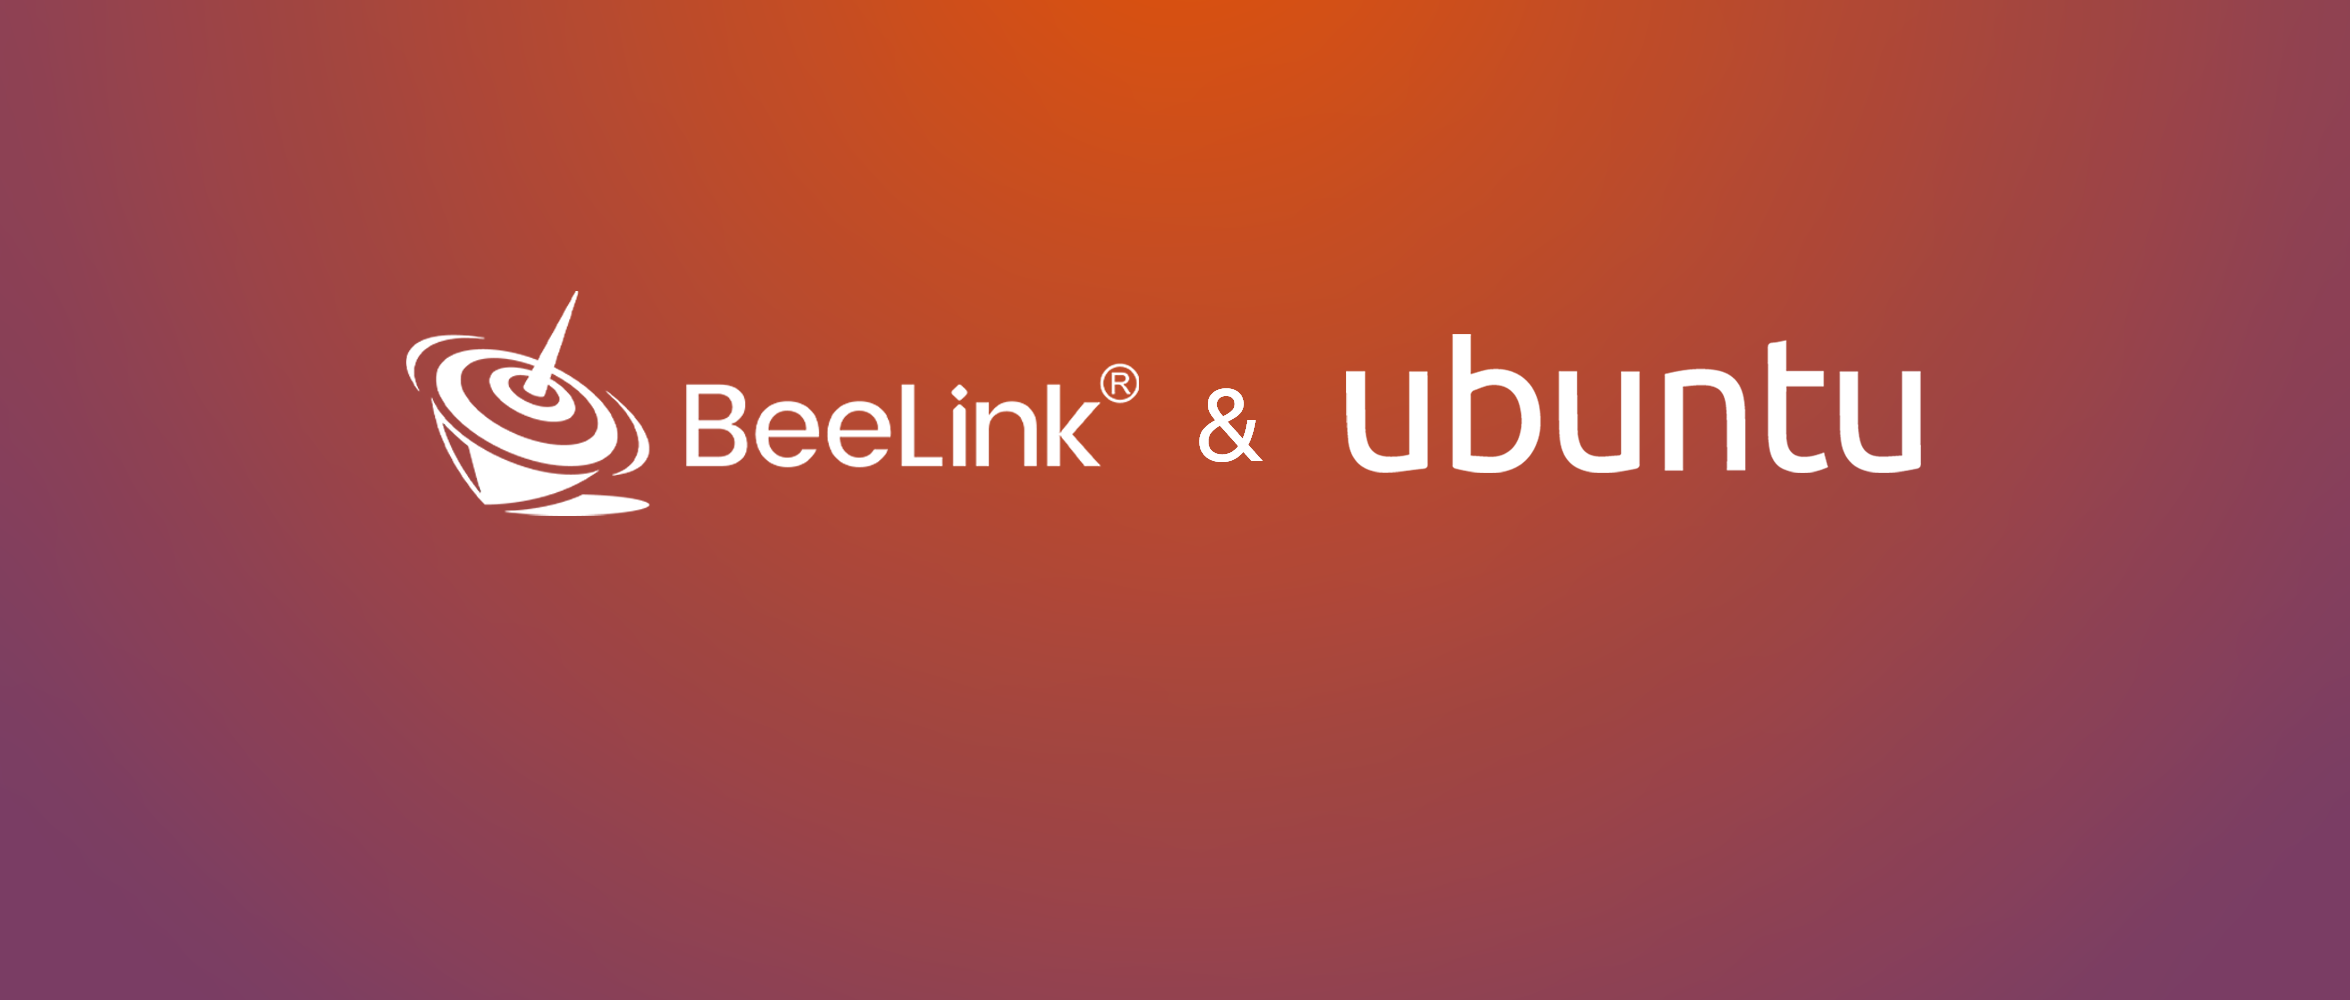 How to Install Ubuntu on Beelink Mini PC